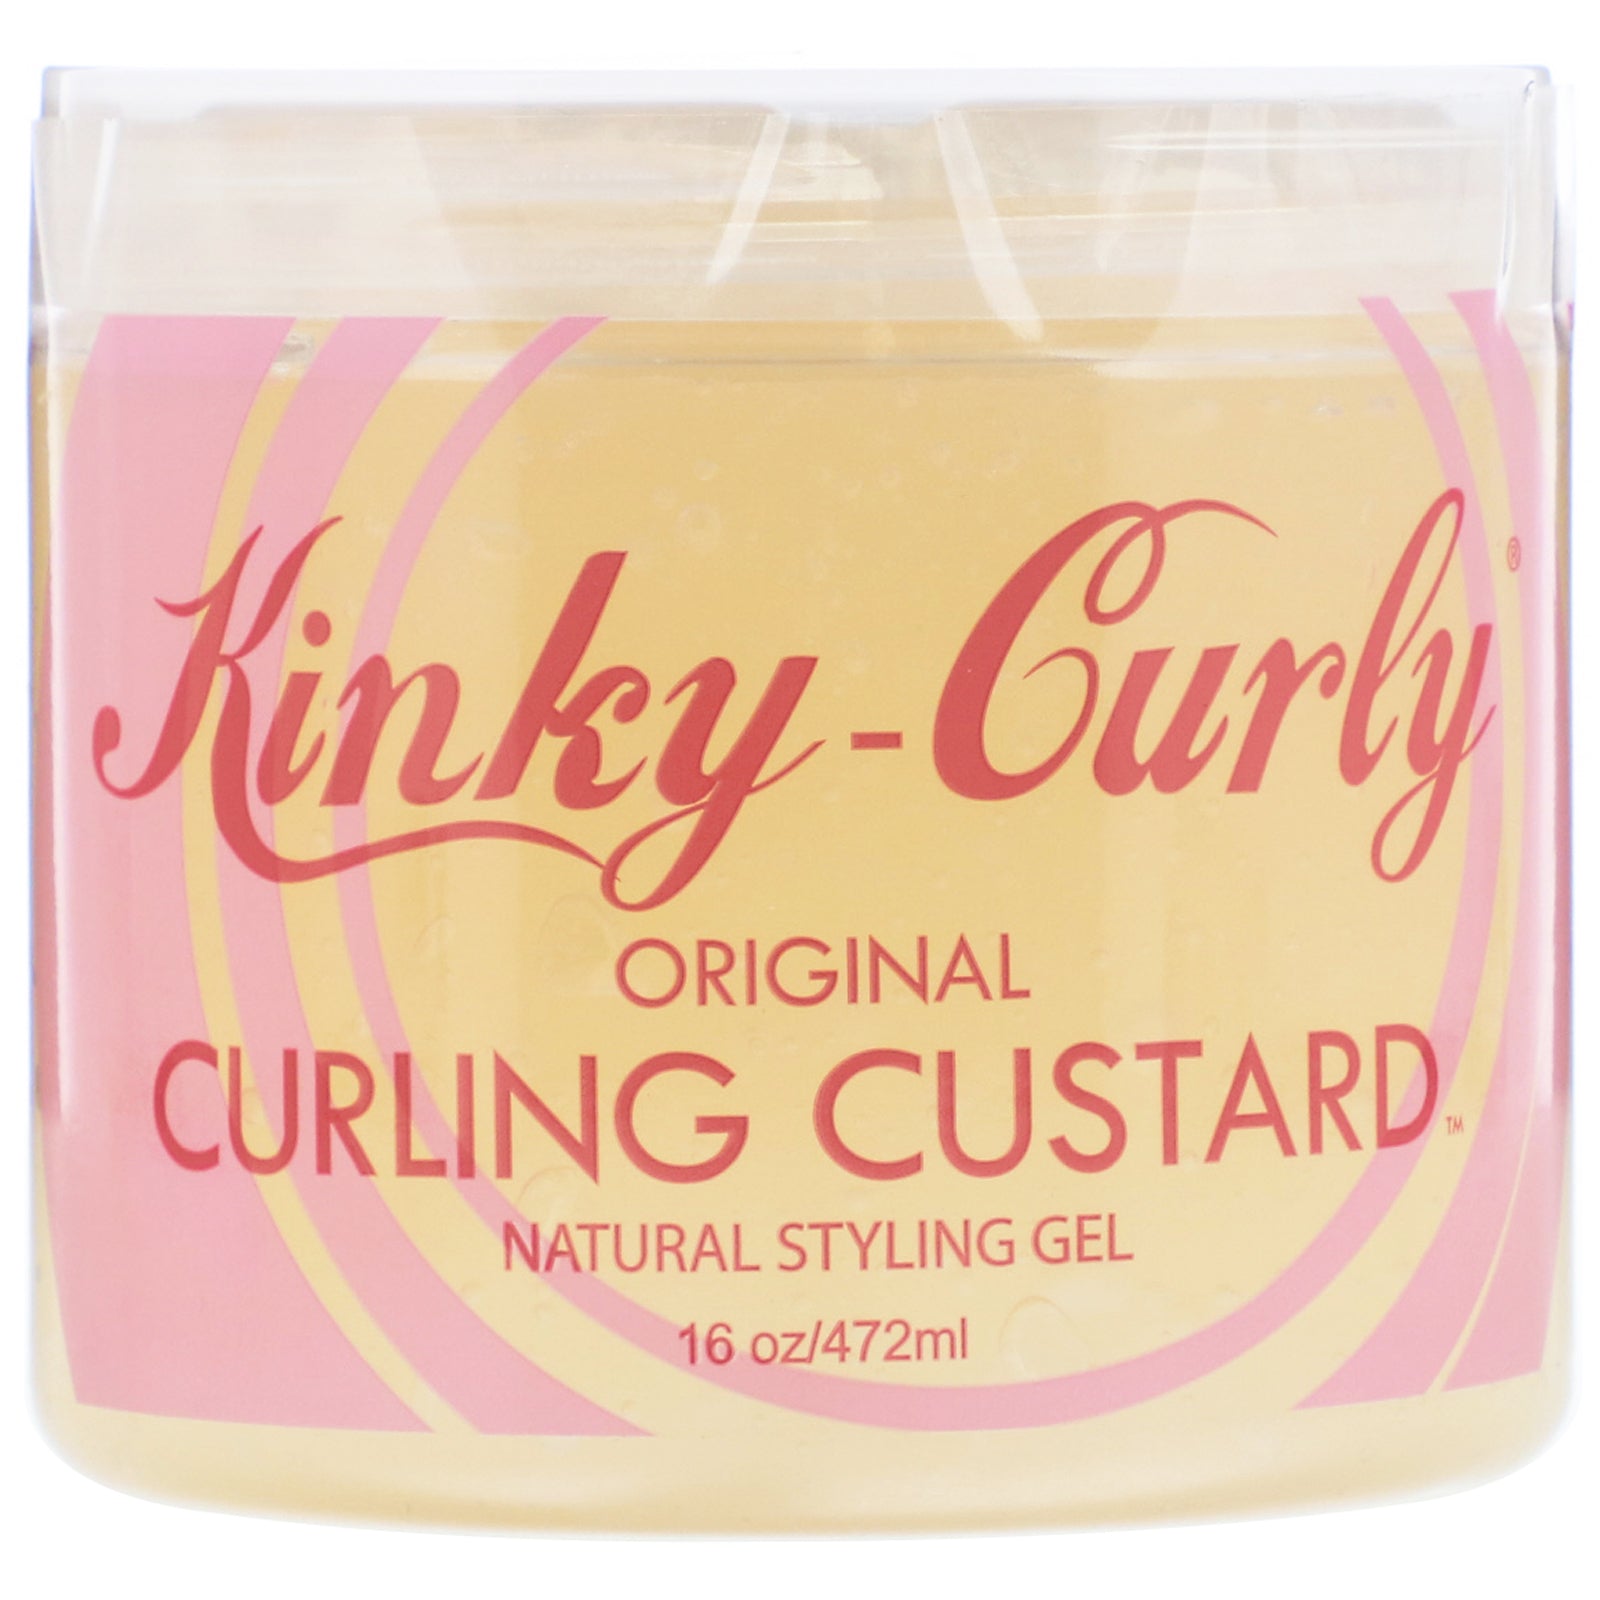 Kinky-Curly, Original Curling Custard, Natural Styling Gel, 16 oz (472 ml)